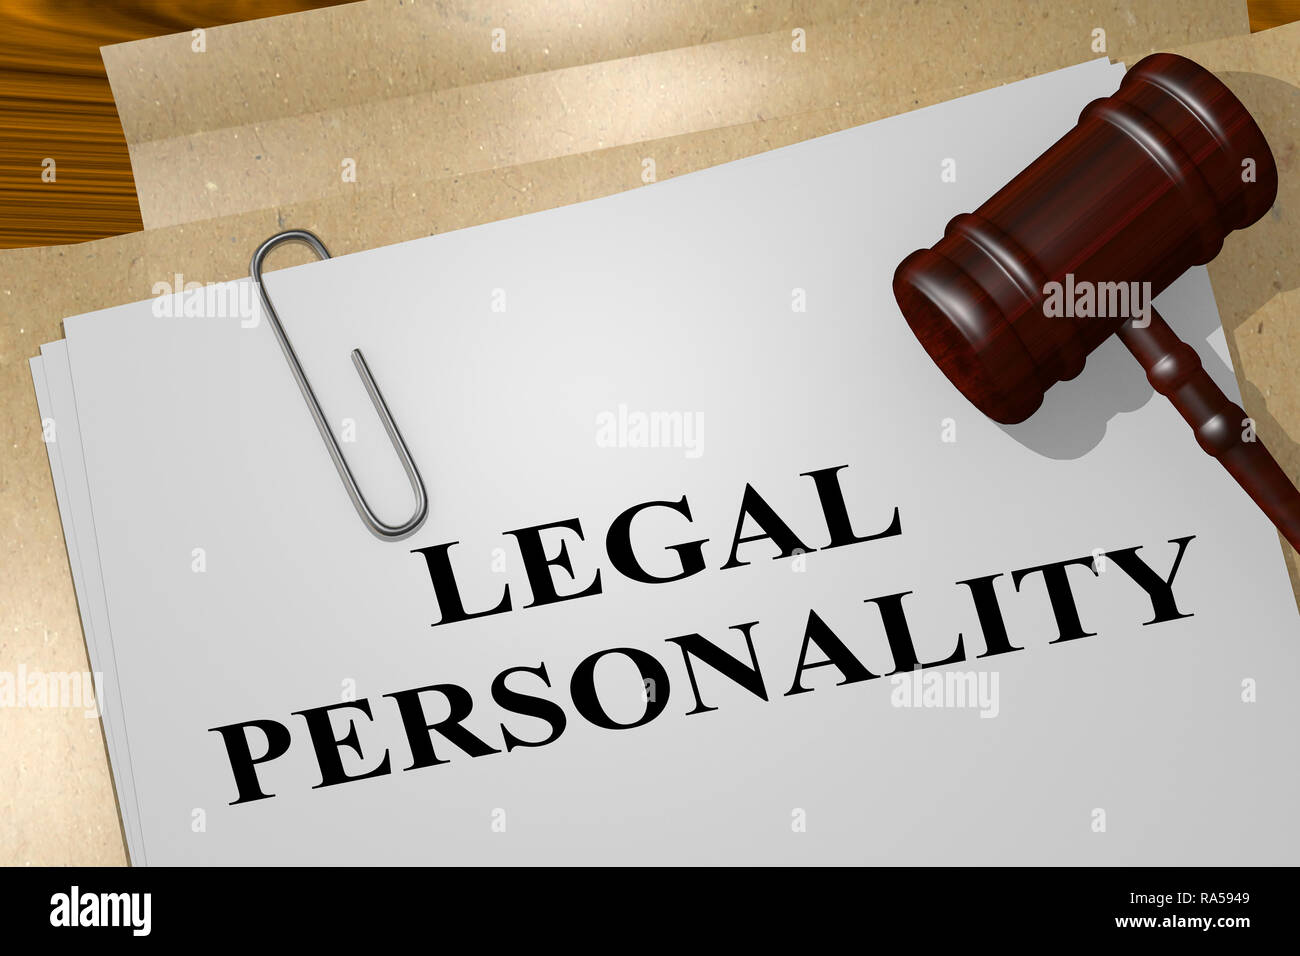 Legal Personality คือ อะไร